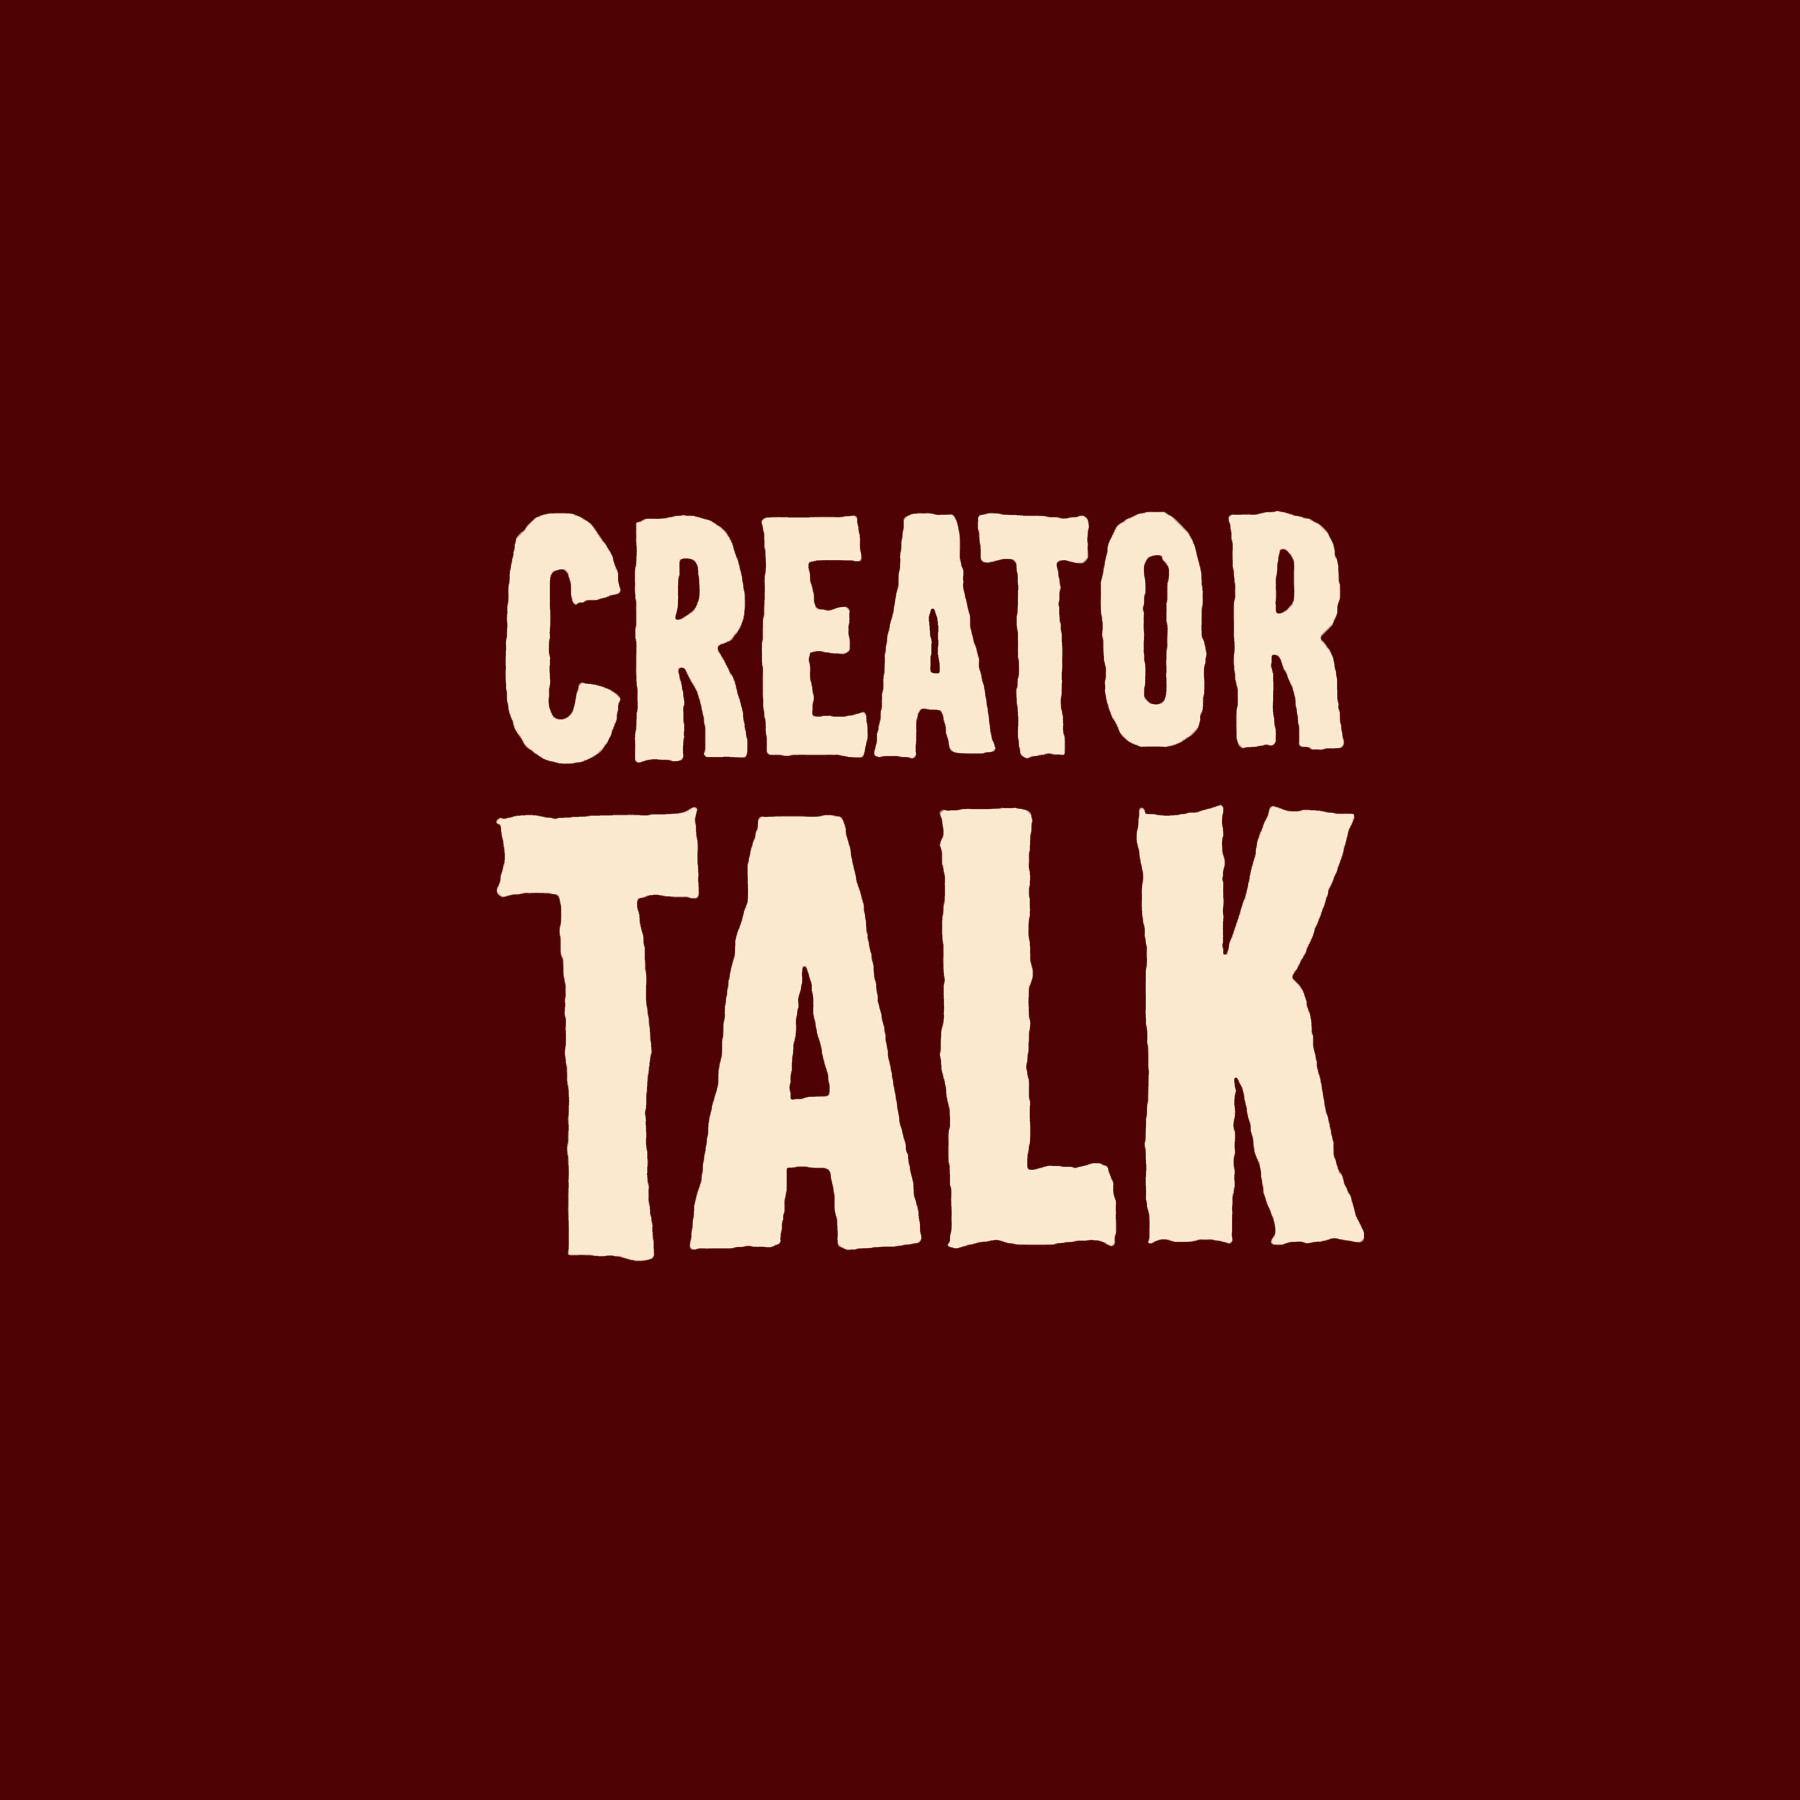 What Do You Do - Creator Talk